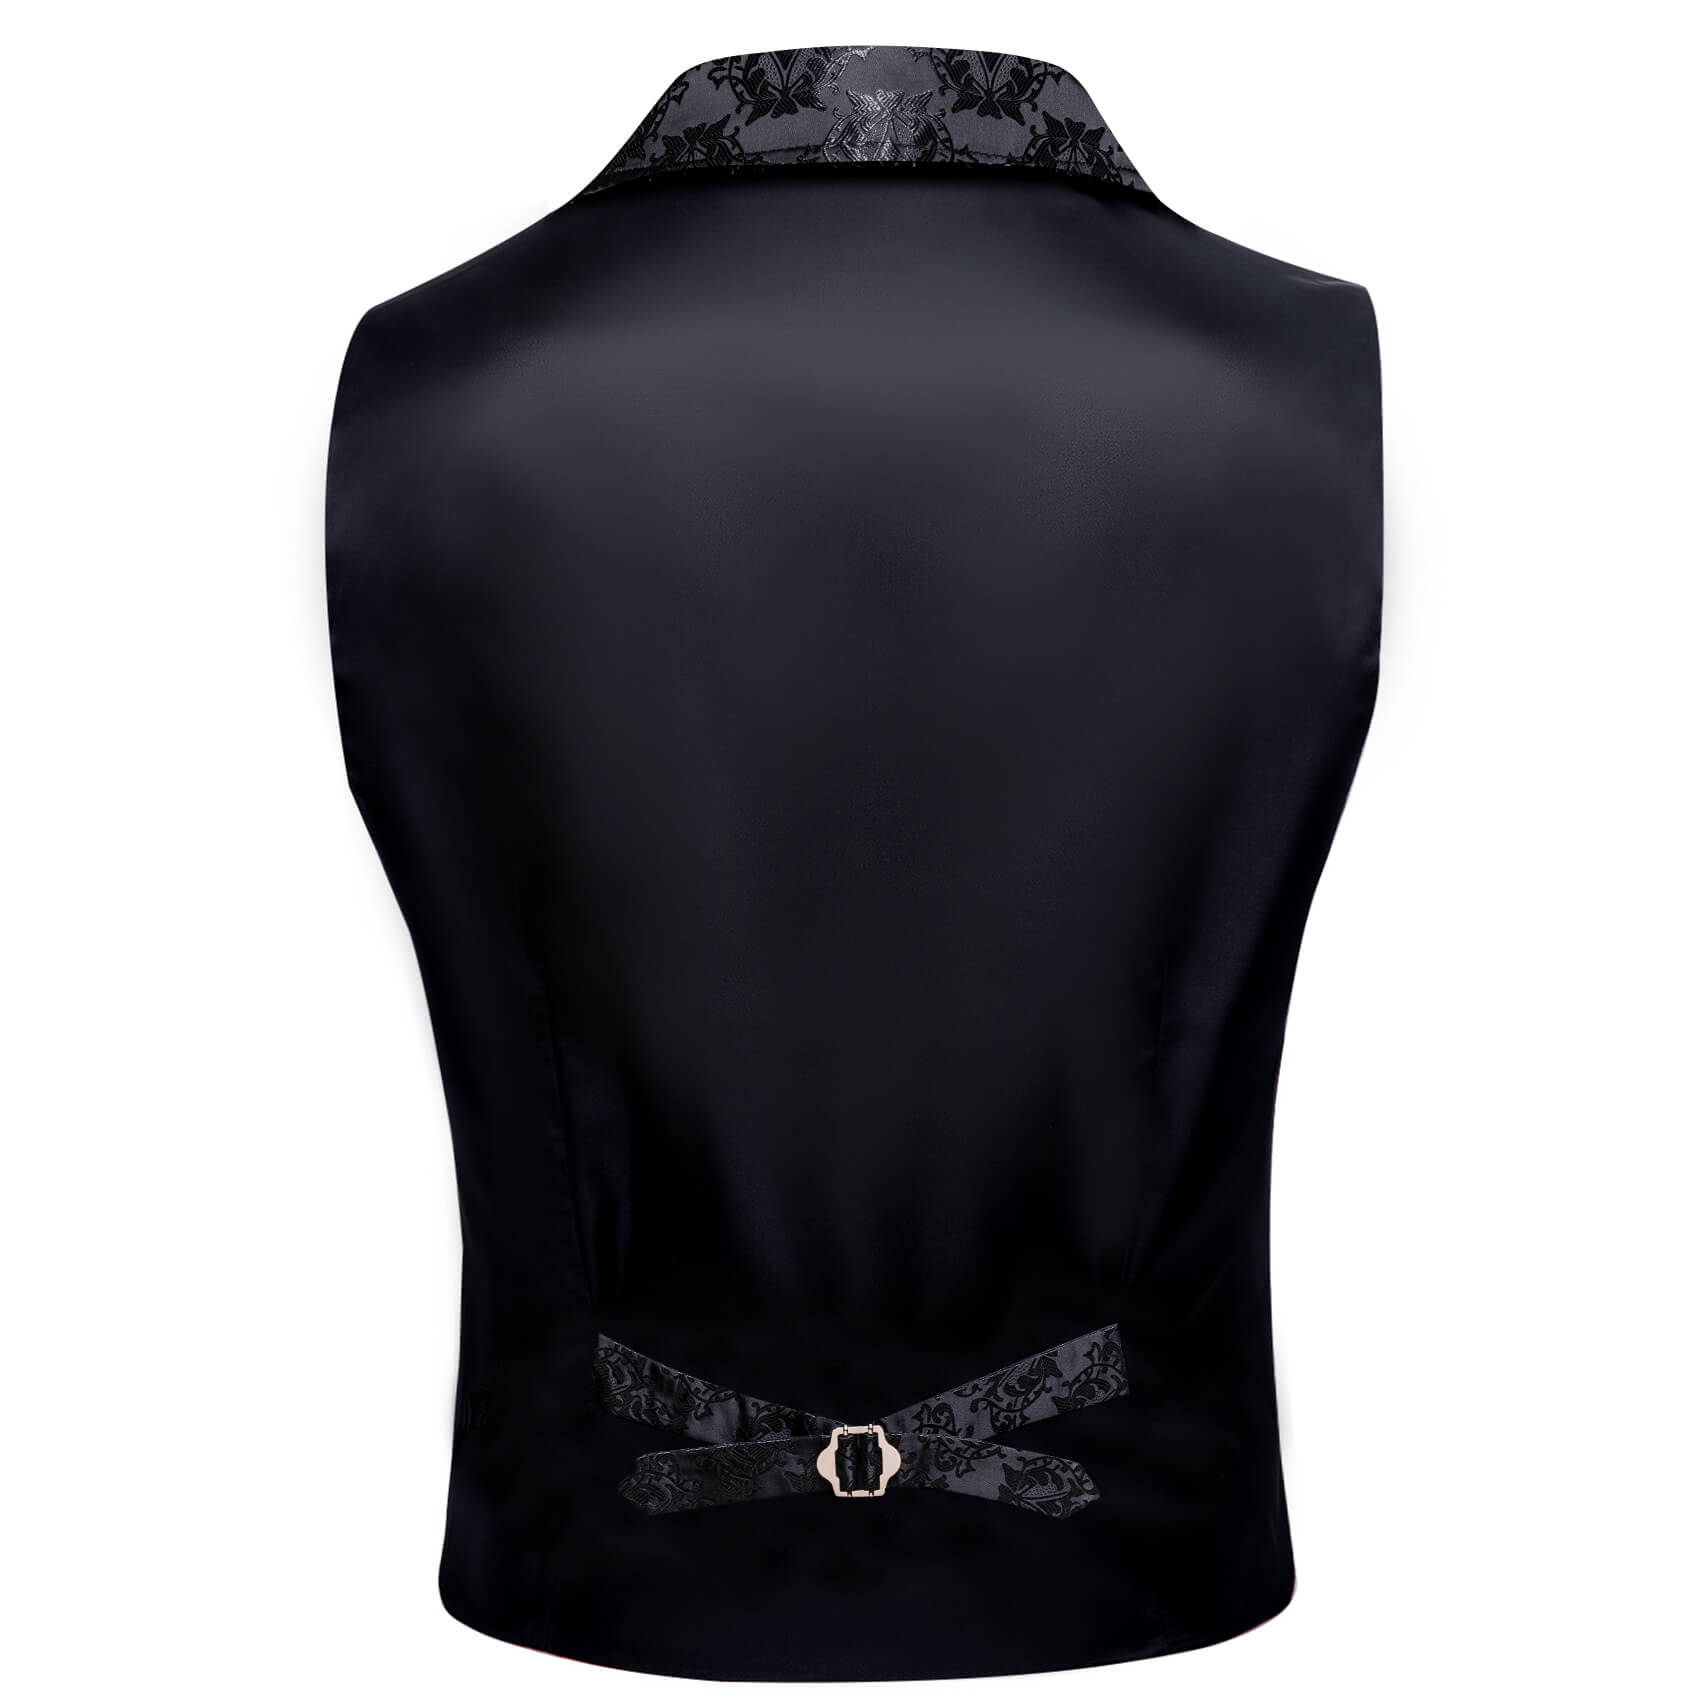  Grey Jacquard Novelty Black Mens Button Up Vest